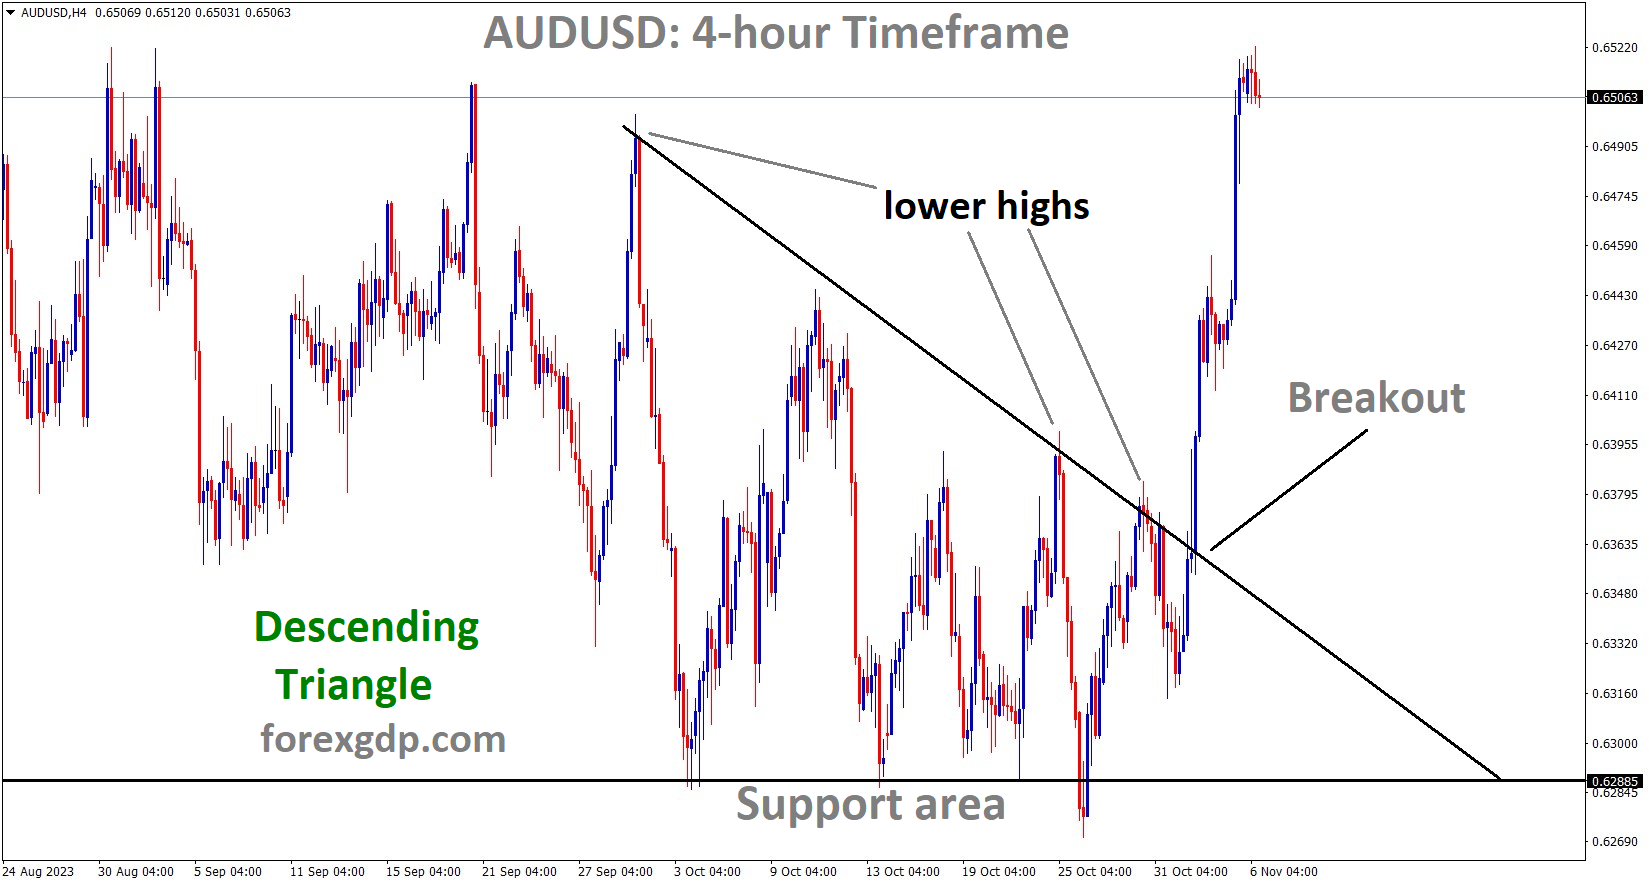 AUDUSD H4 TF Analysis Market has broken the Descending triangle pattern in upside